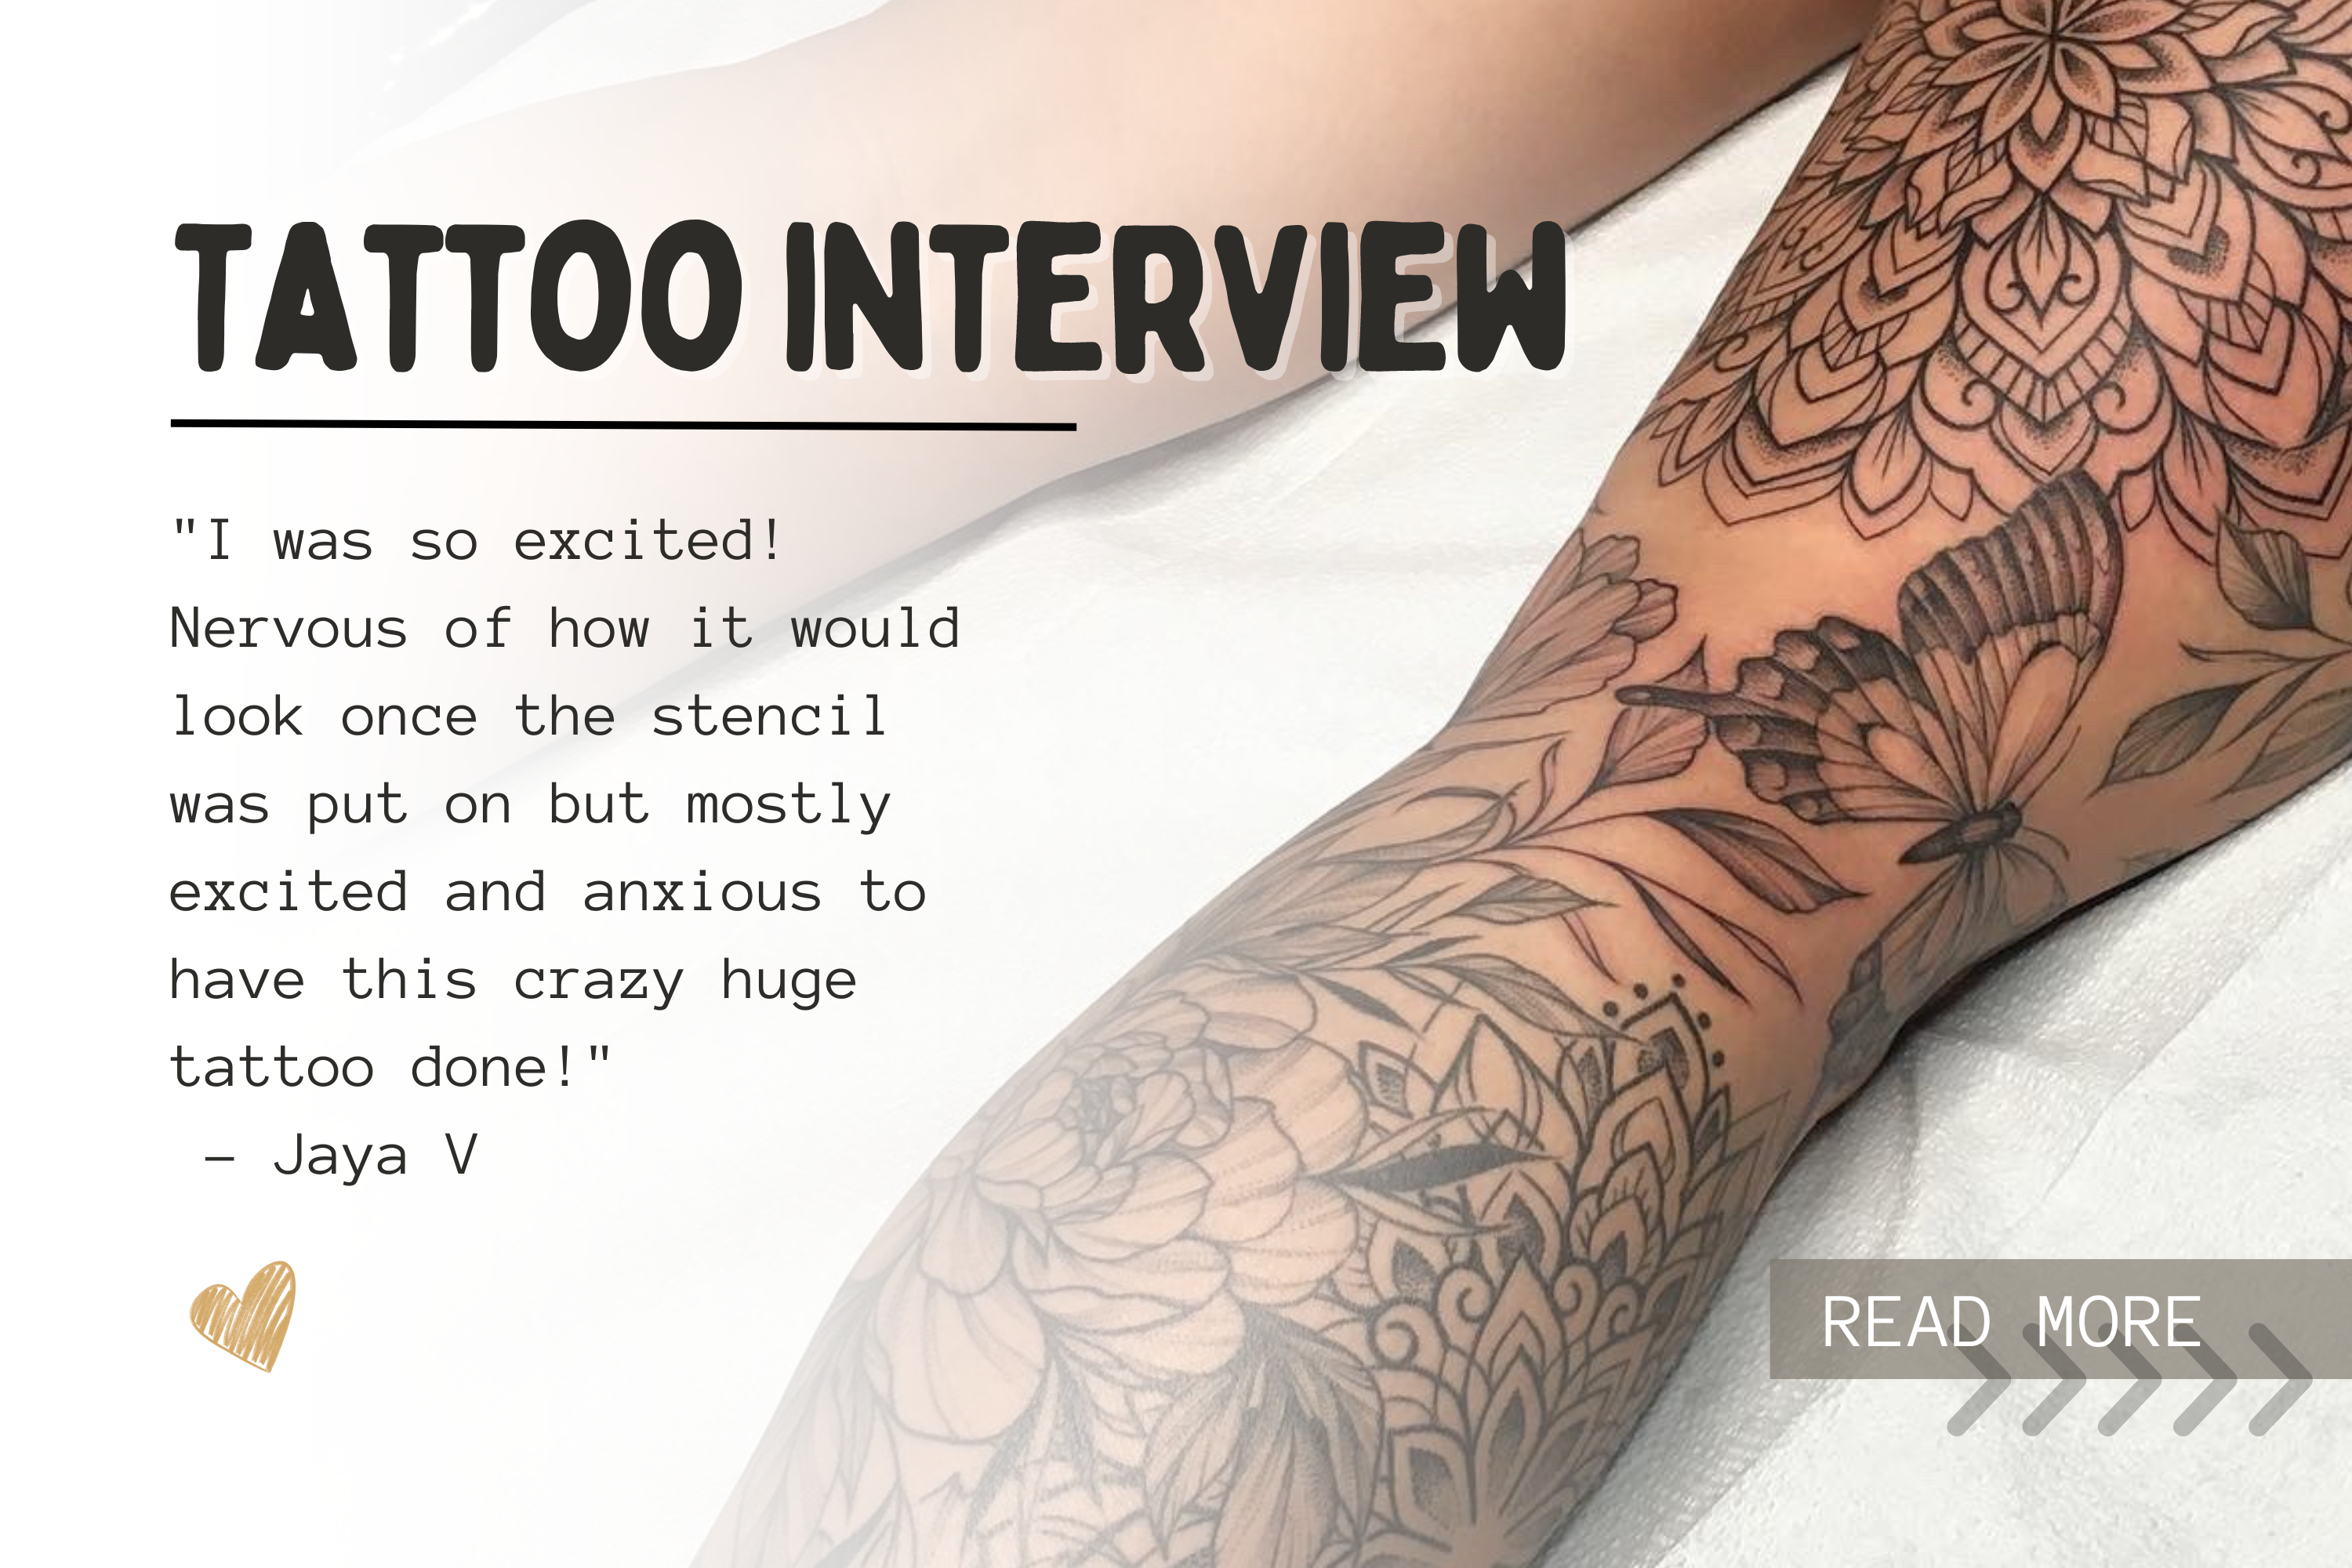 Tattoo Cover Up Leg Sleeve - Black | TatCover™